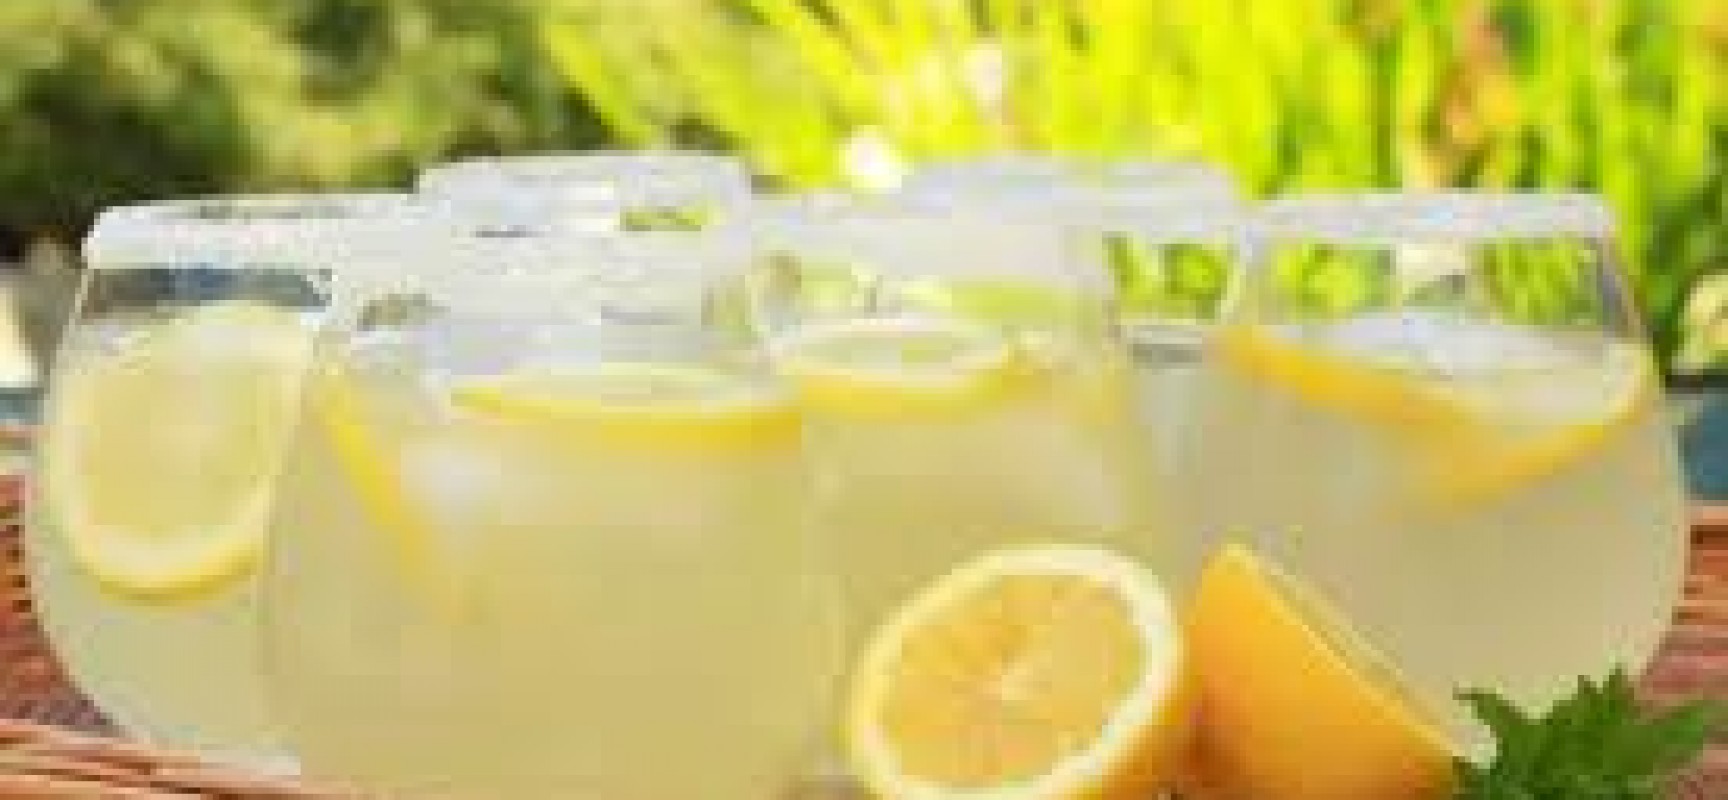 Different Lemonade Recipes